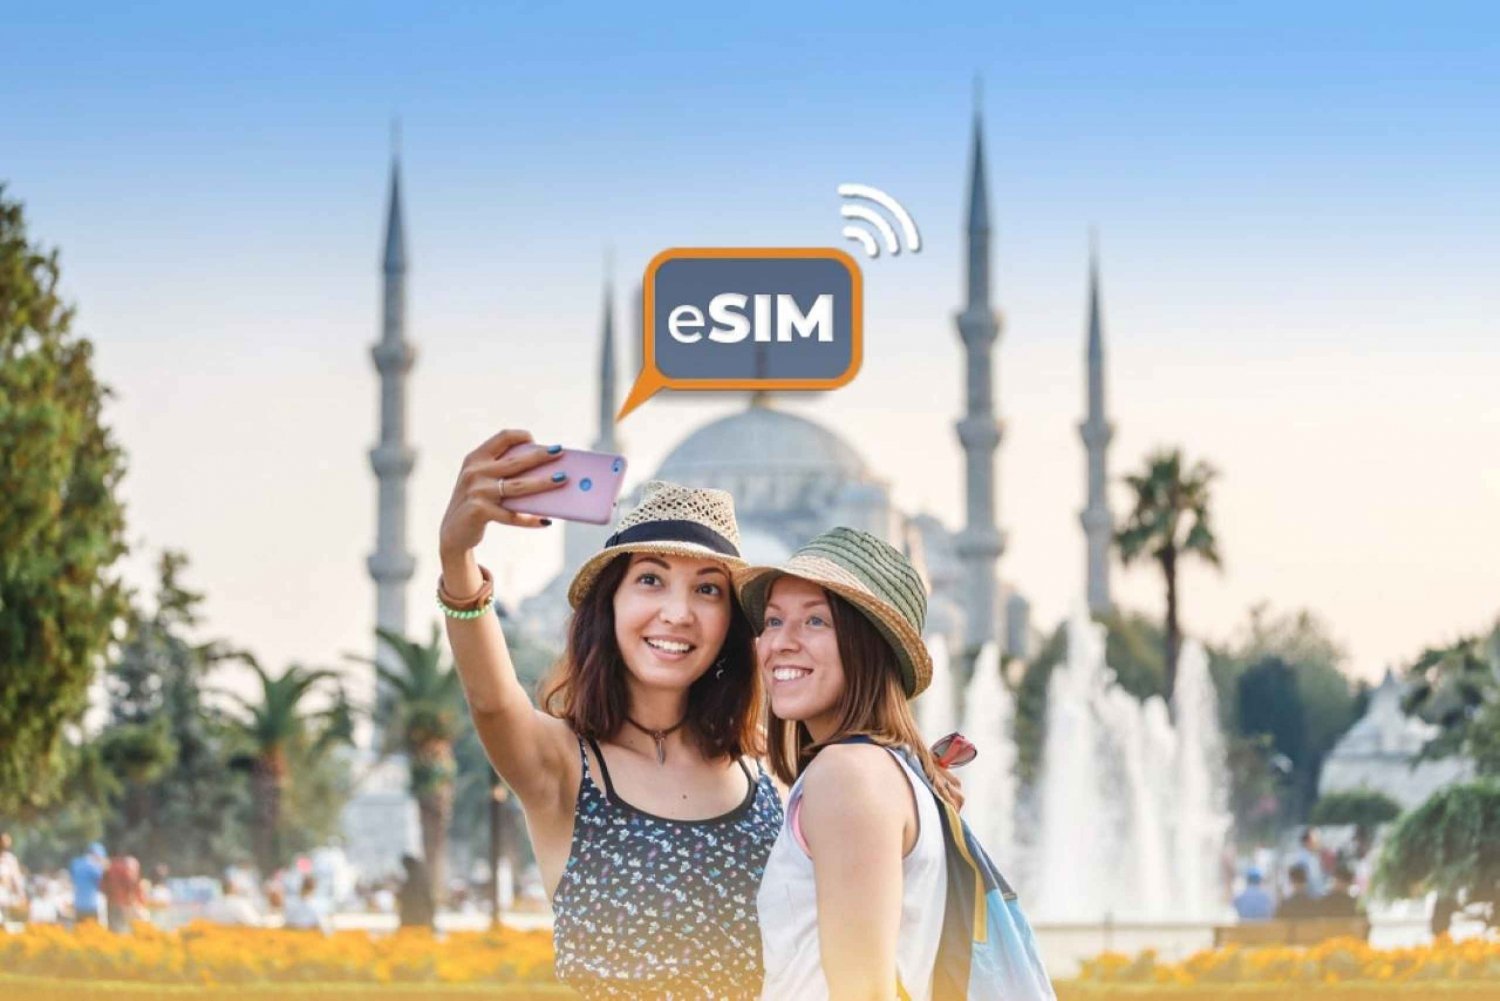 Kalkan / Turkey: Roaming Internet with eSIM Mobile Data